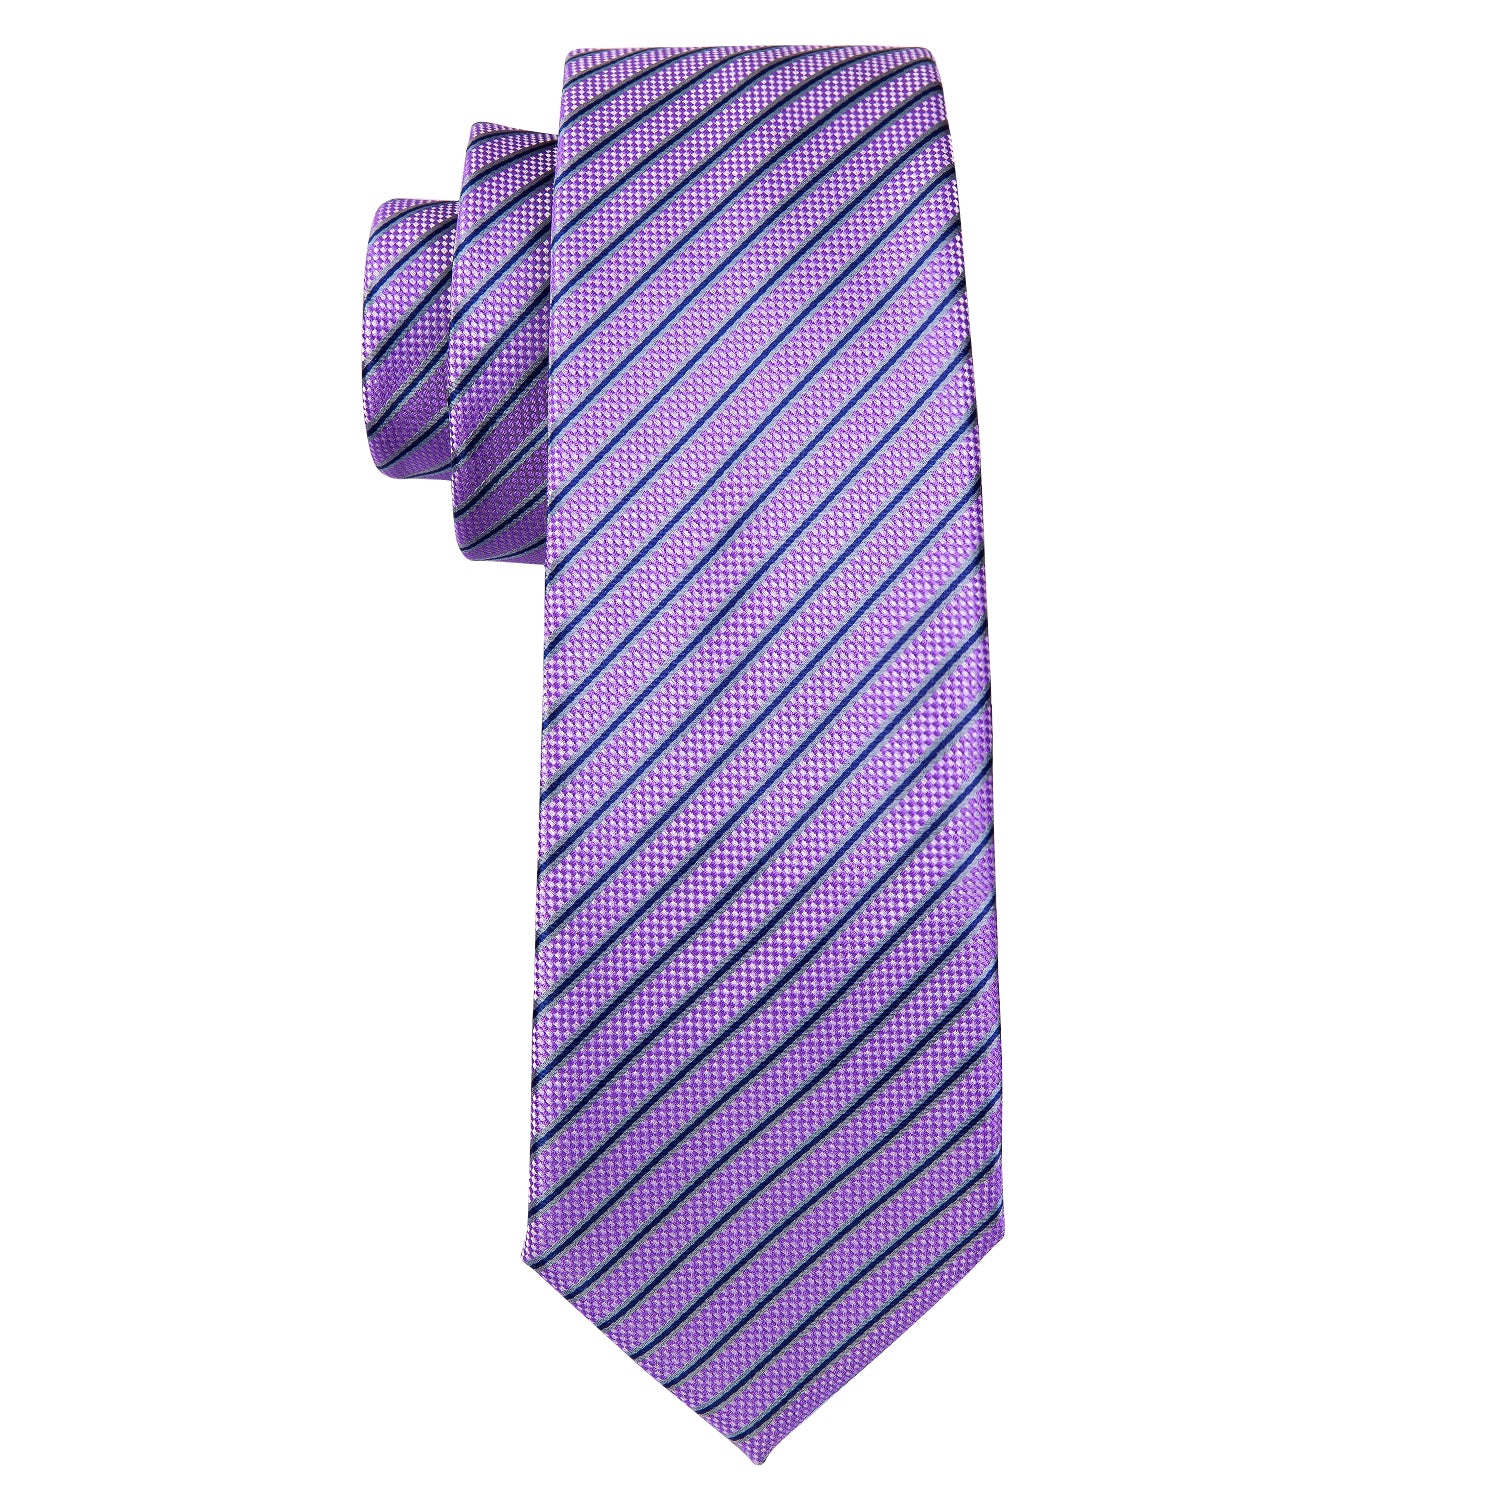 59 inch purple tie for wedding 